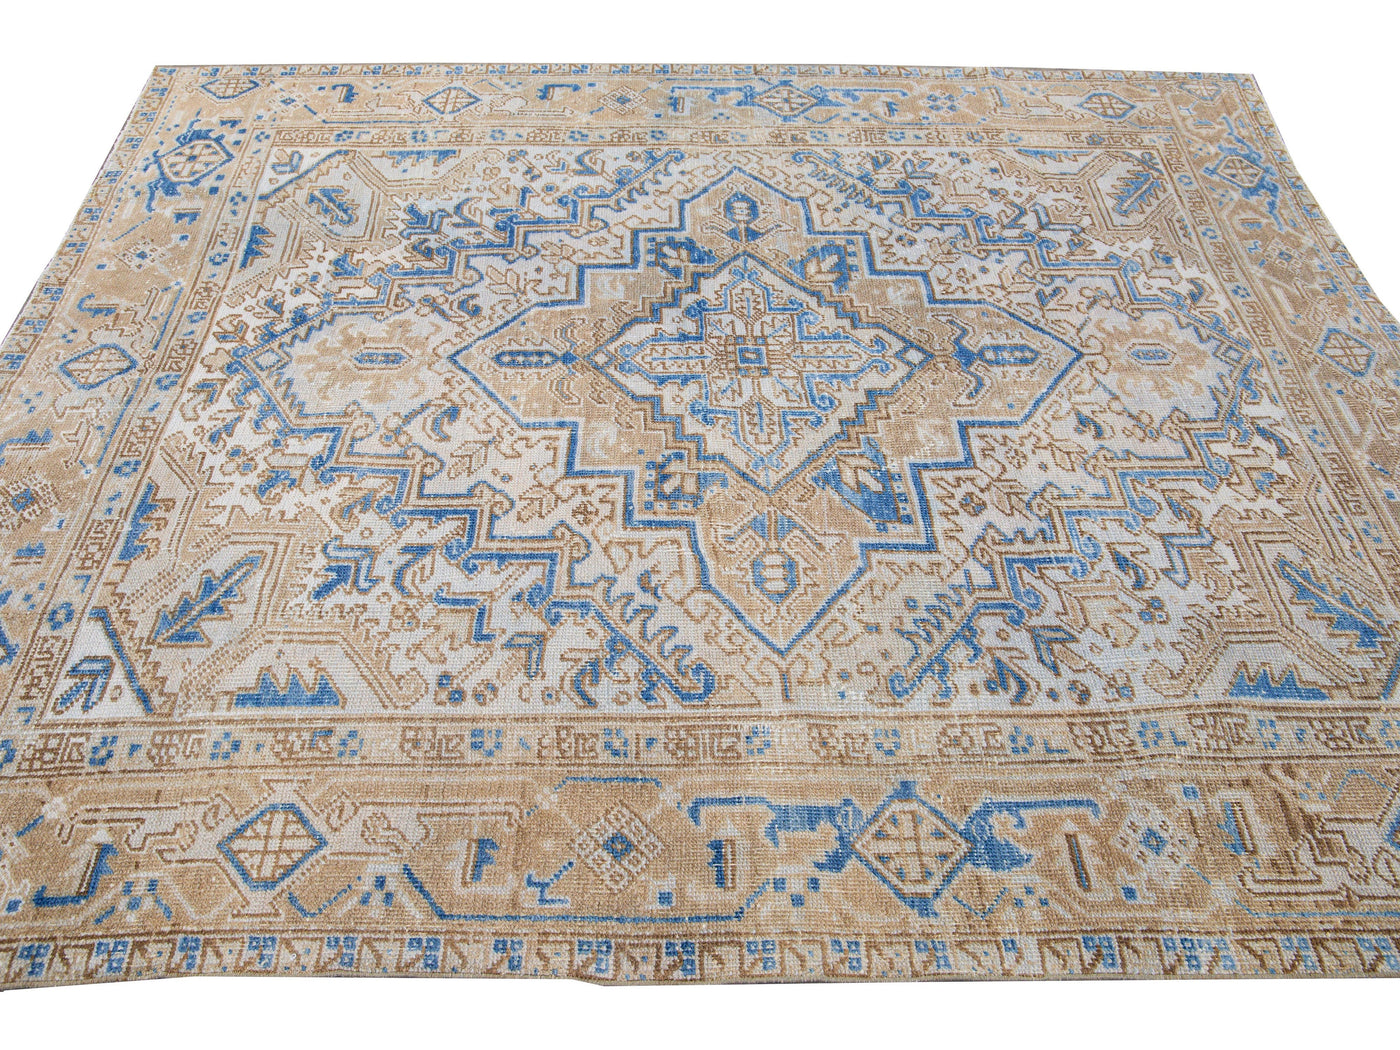 Antique Persian Heriz Beige and Blue Handmade Medallion Designed Wool Rug